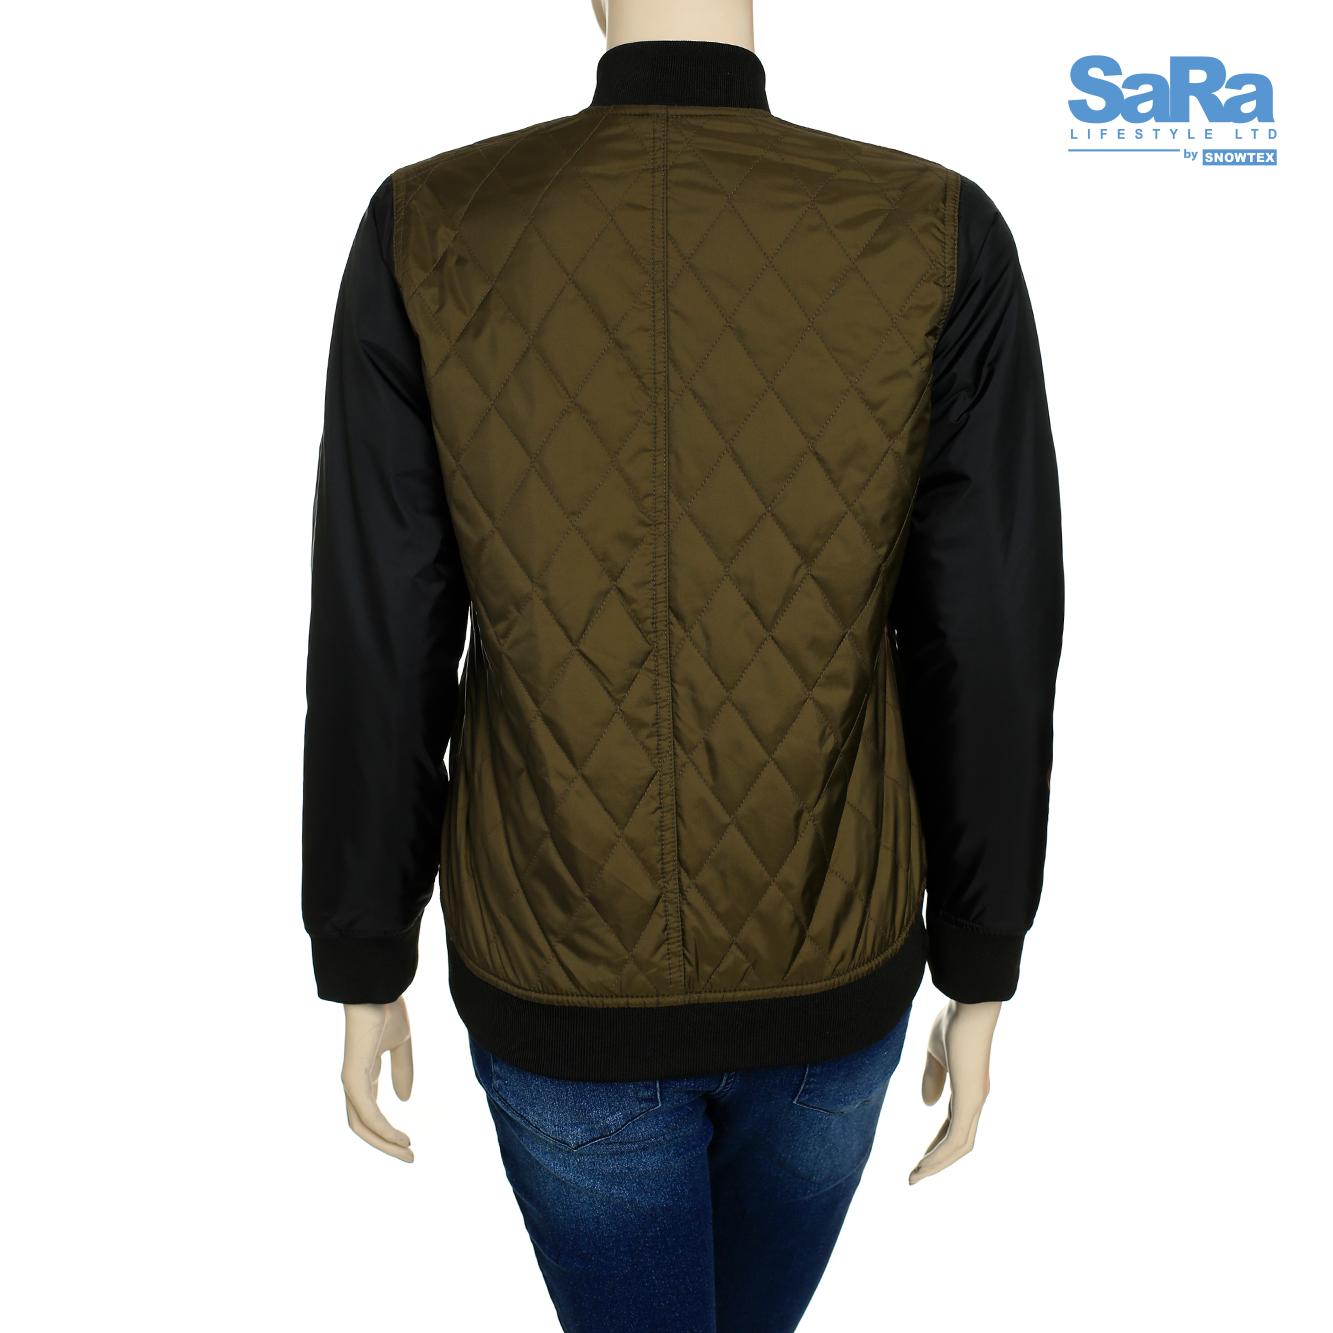 SaRa Olive & Black Navy Jacket for Women